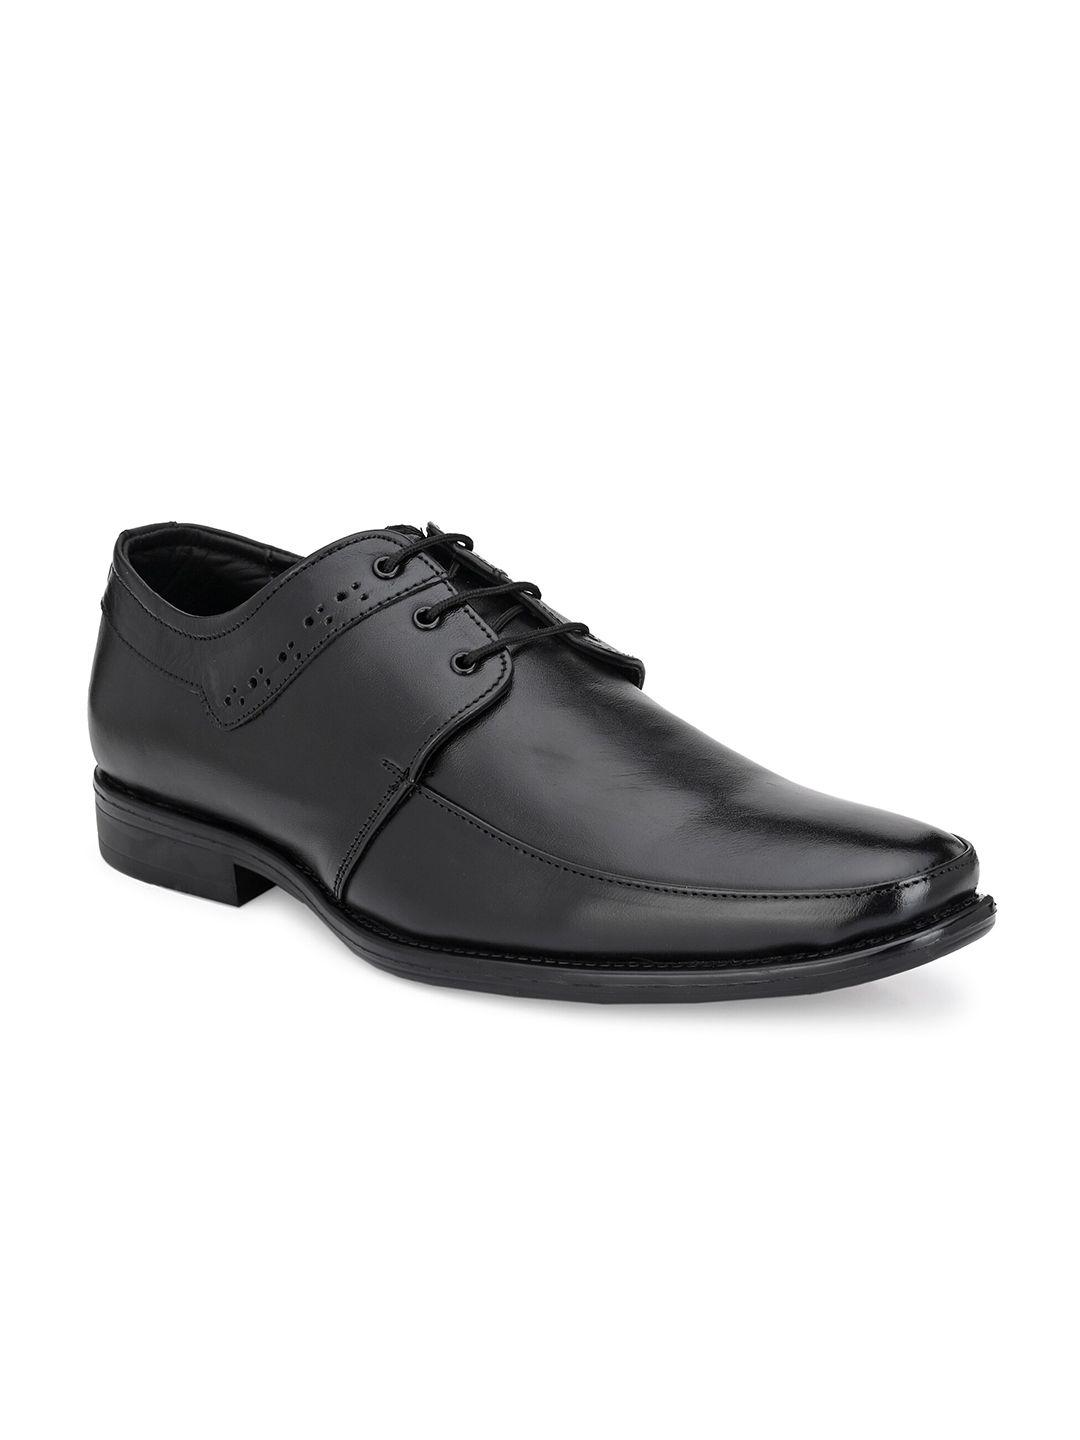 eego italy men black solid formal derby shoes